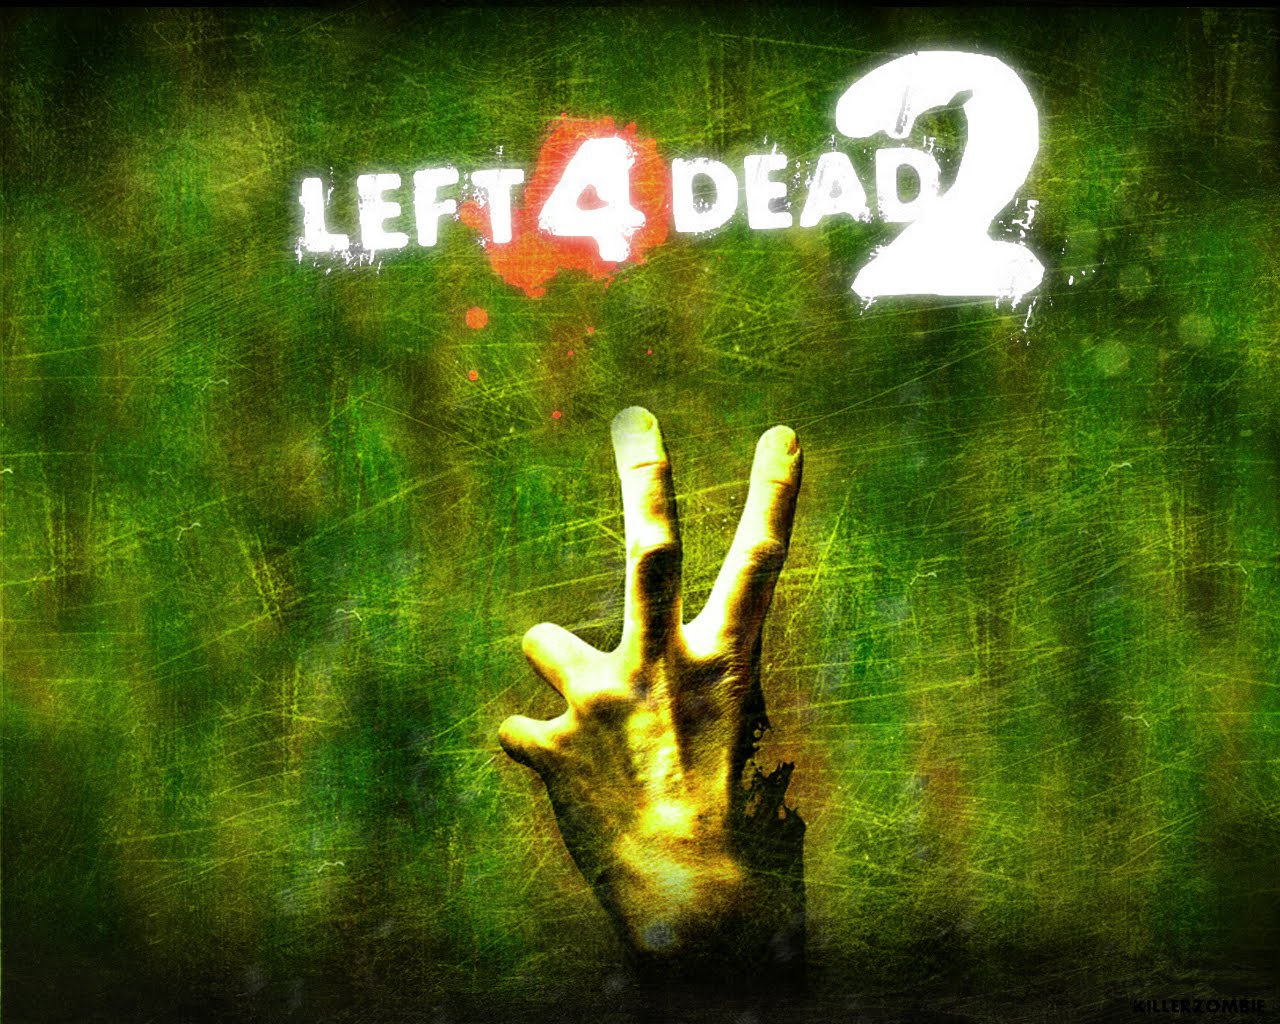 [left-4-dead-2-logo-wallpaper.jpg]